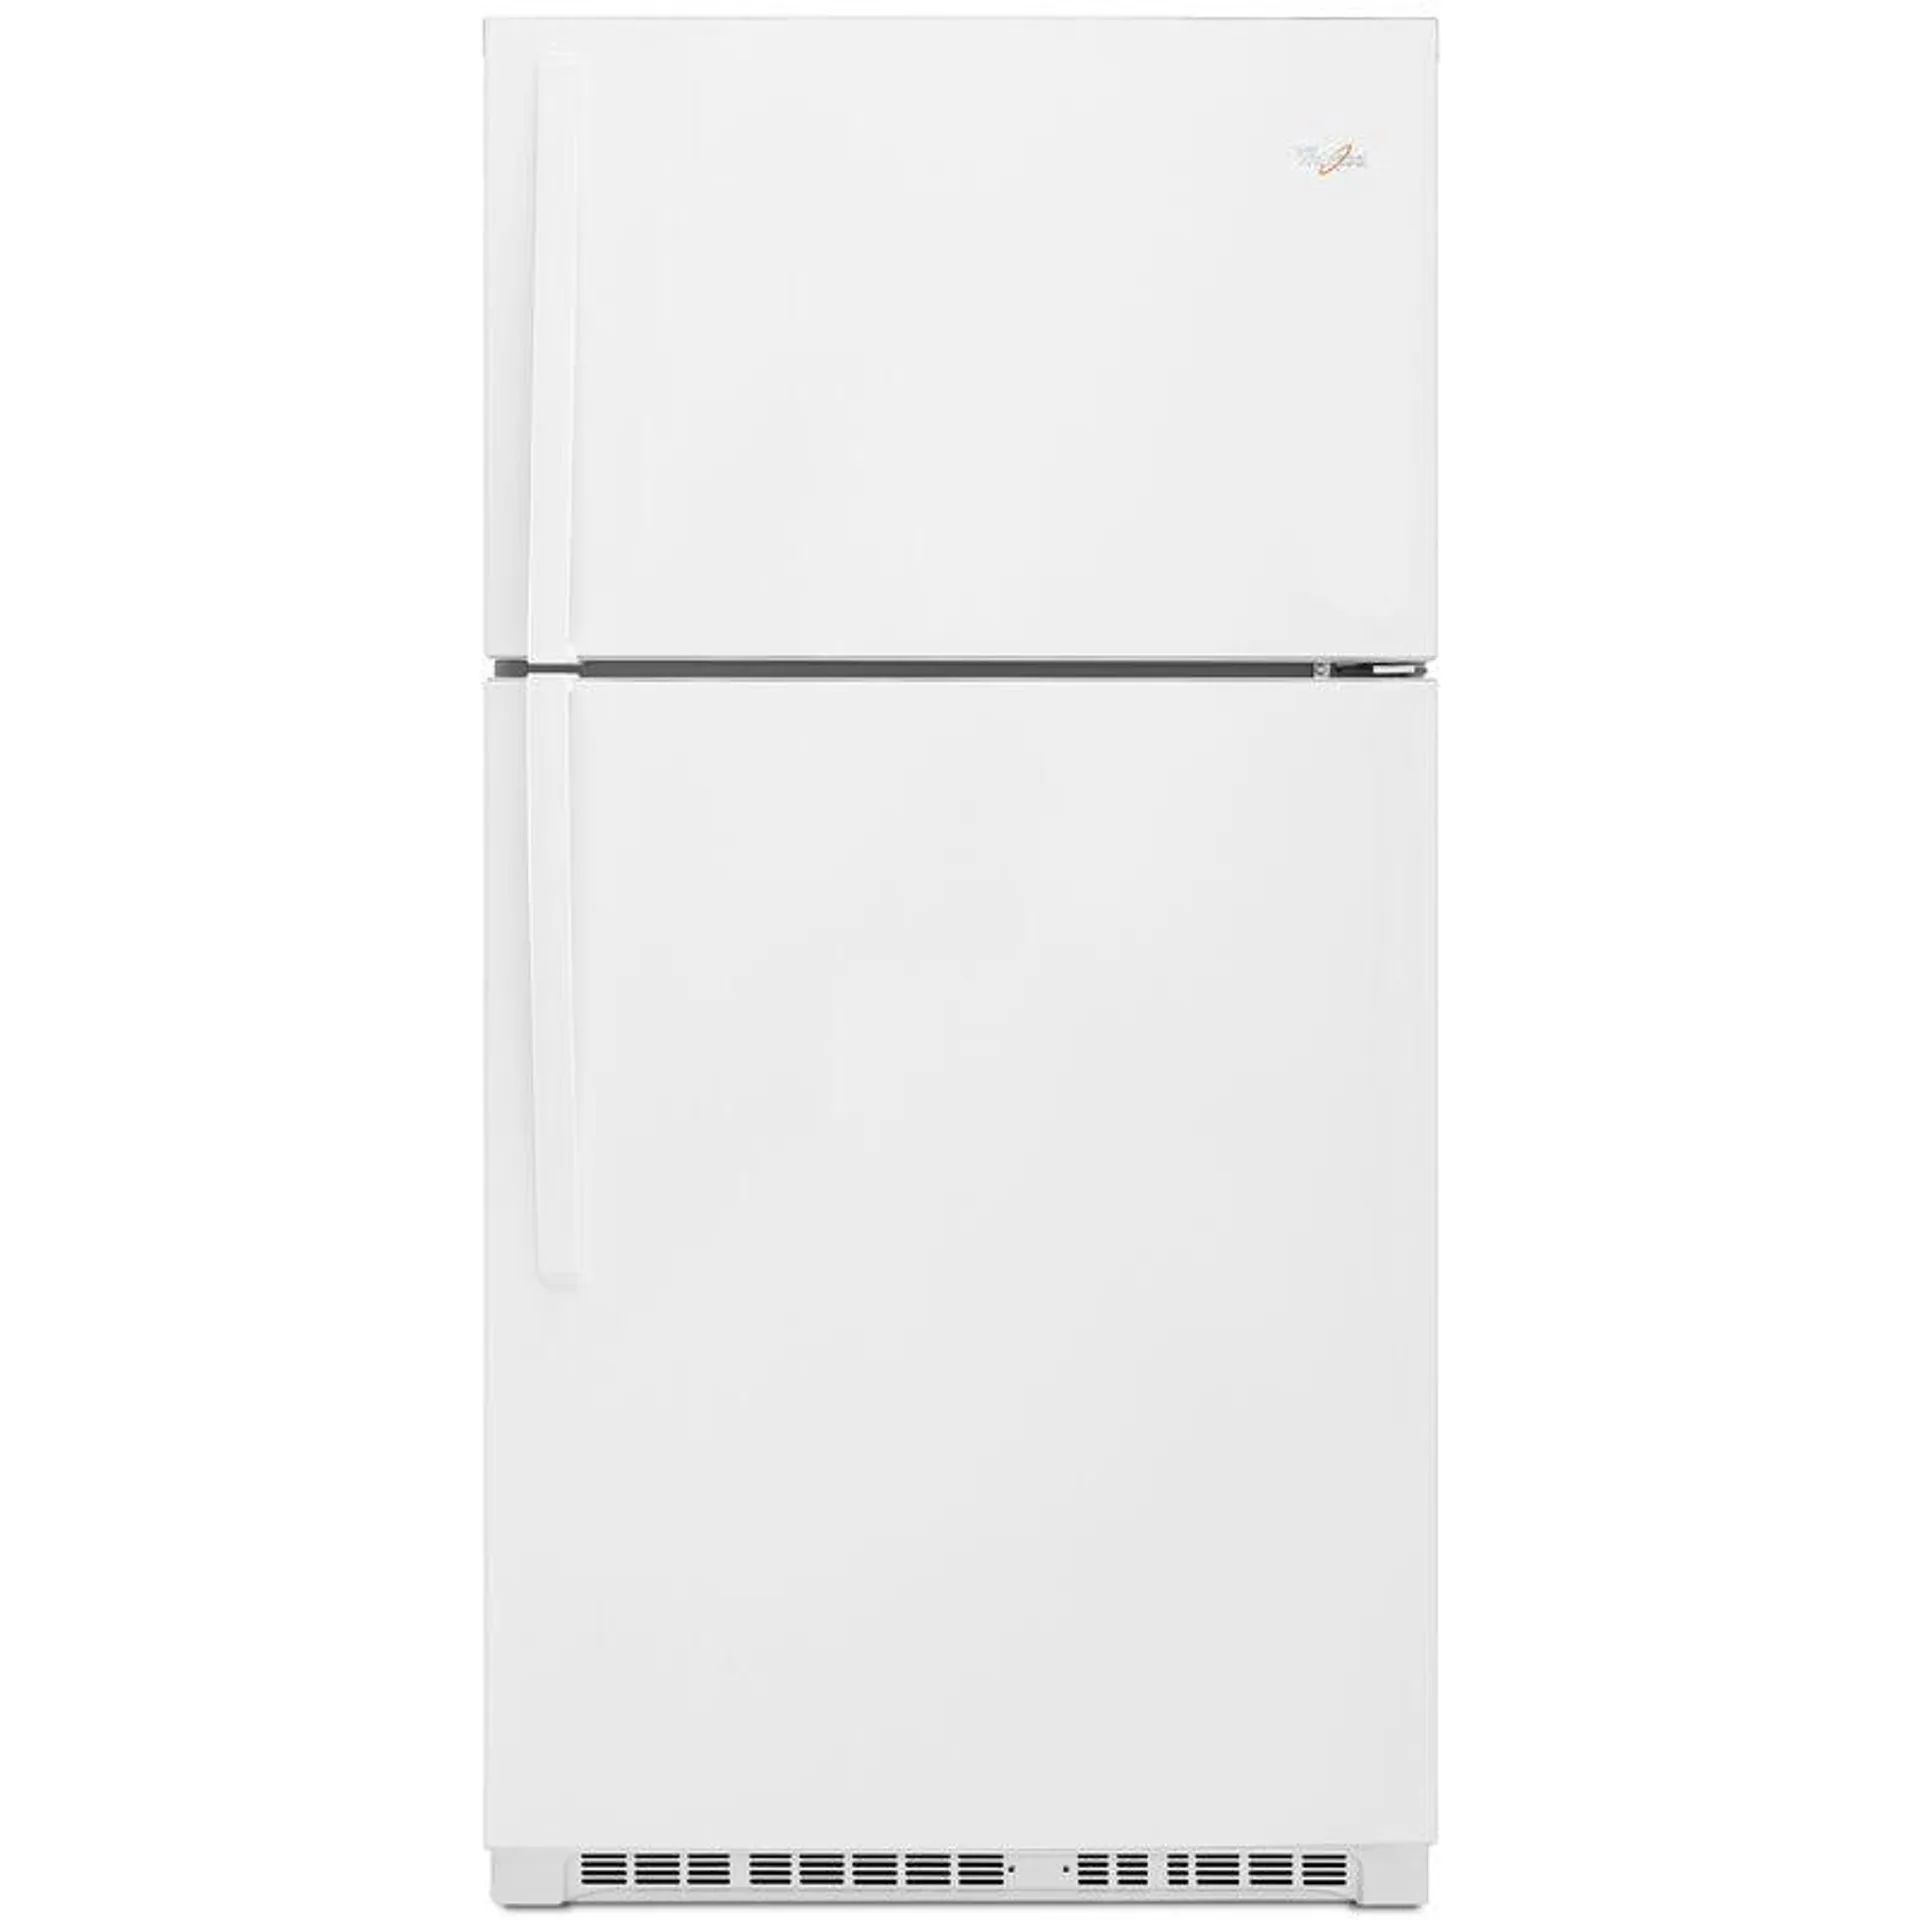 Whirlpool 33 in. 21.3 cu. ft. Top Freezer Refrigerator - White